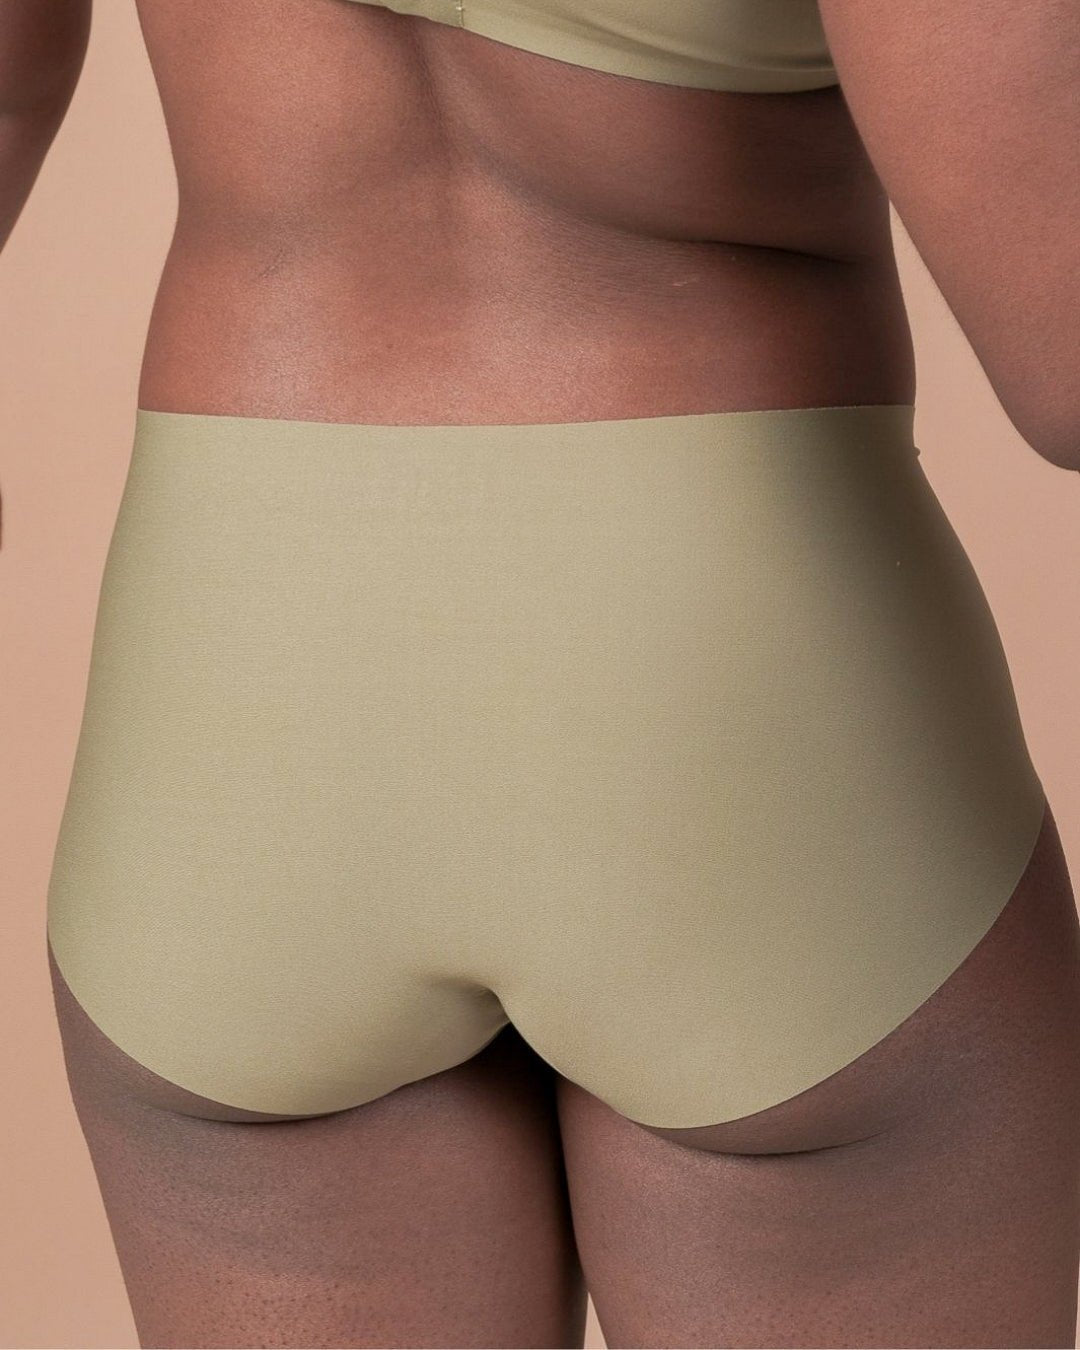 SKIWEND Slip Shorts Women Seamless Boyshorts Panties for Under